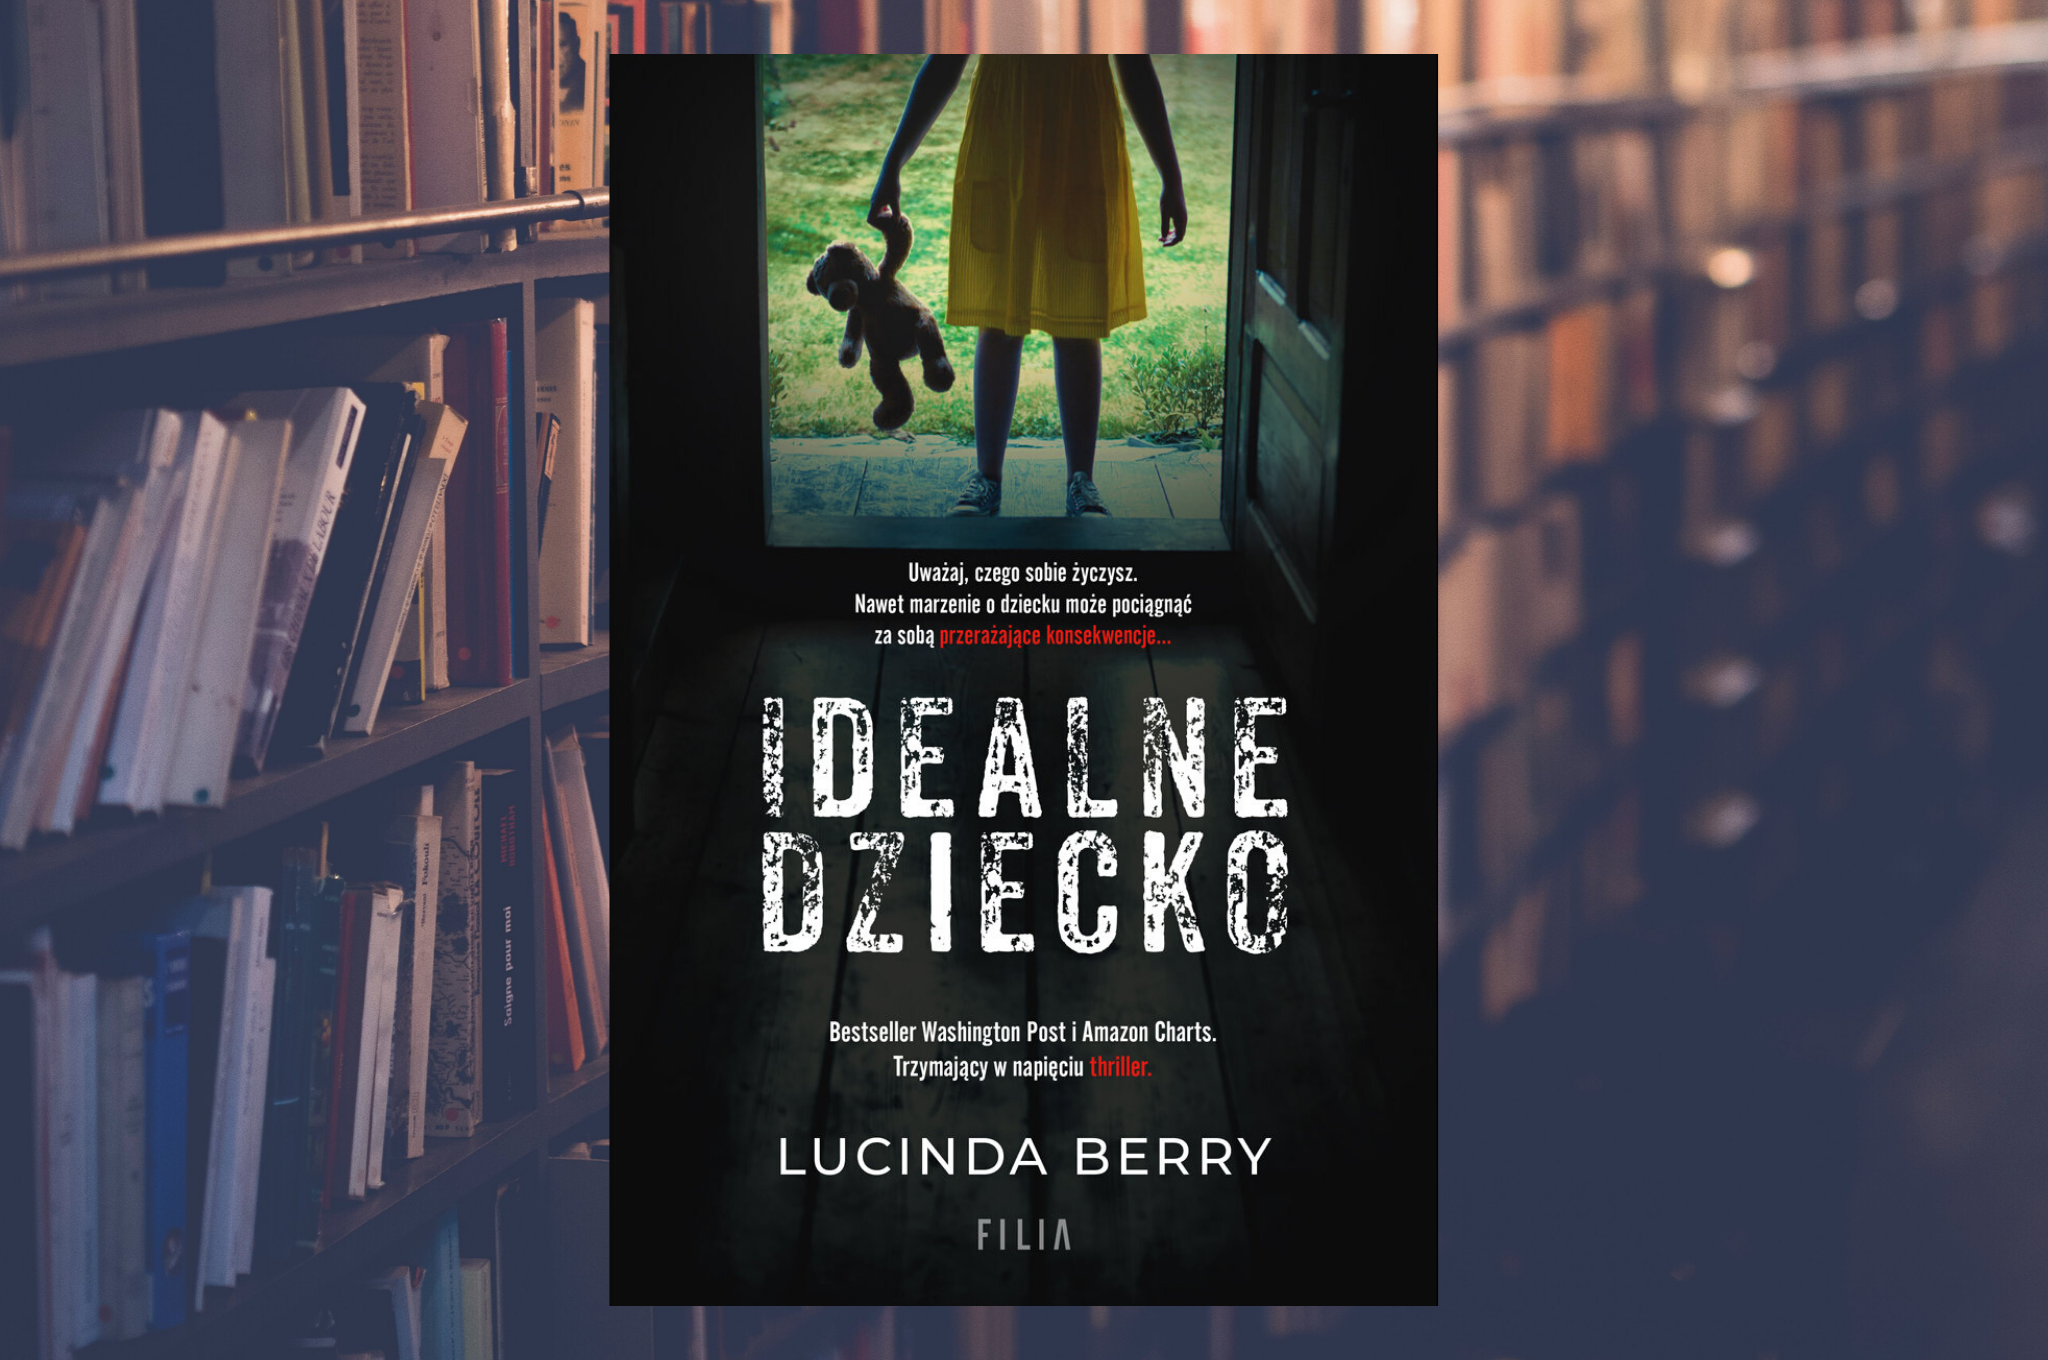 LUCINDA BERRY "IDEALNE DZIECKO"